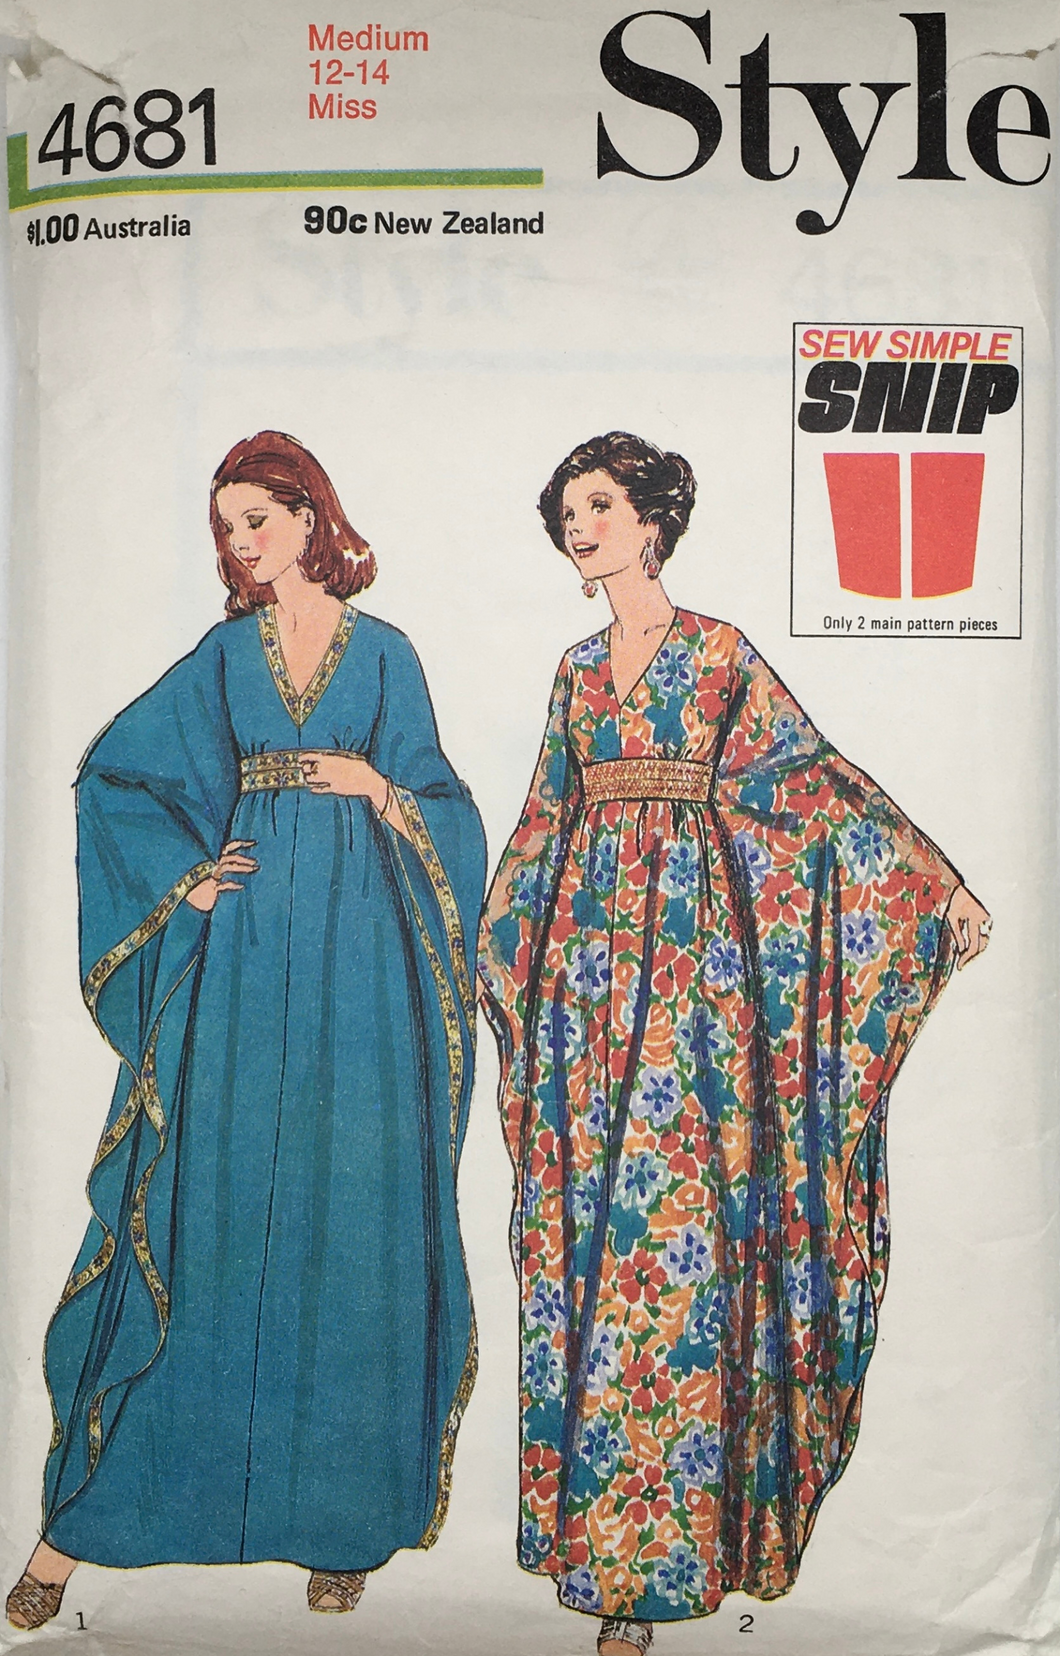 1974 Vintage Sewing Pattern: Style 4681